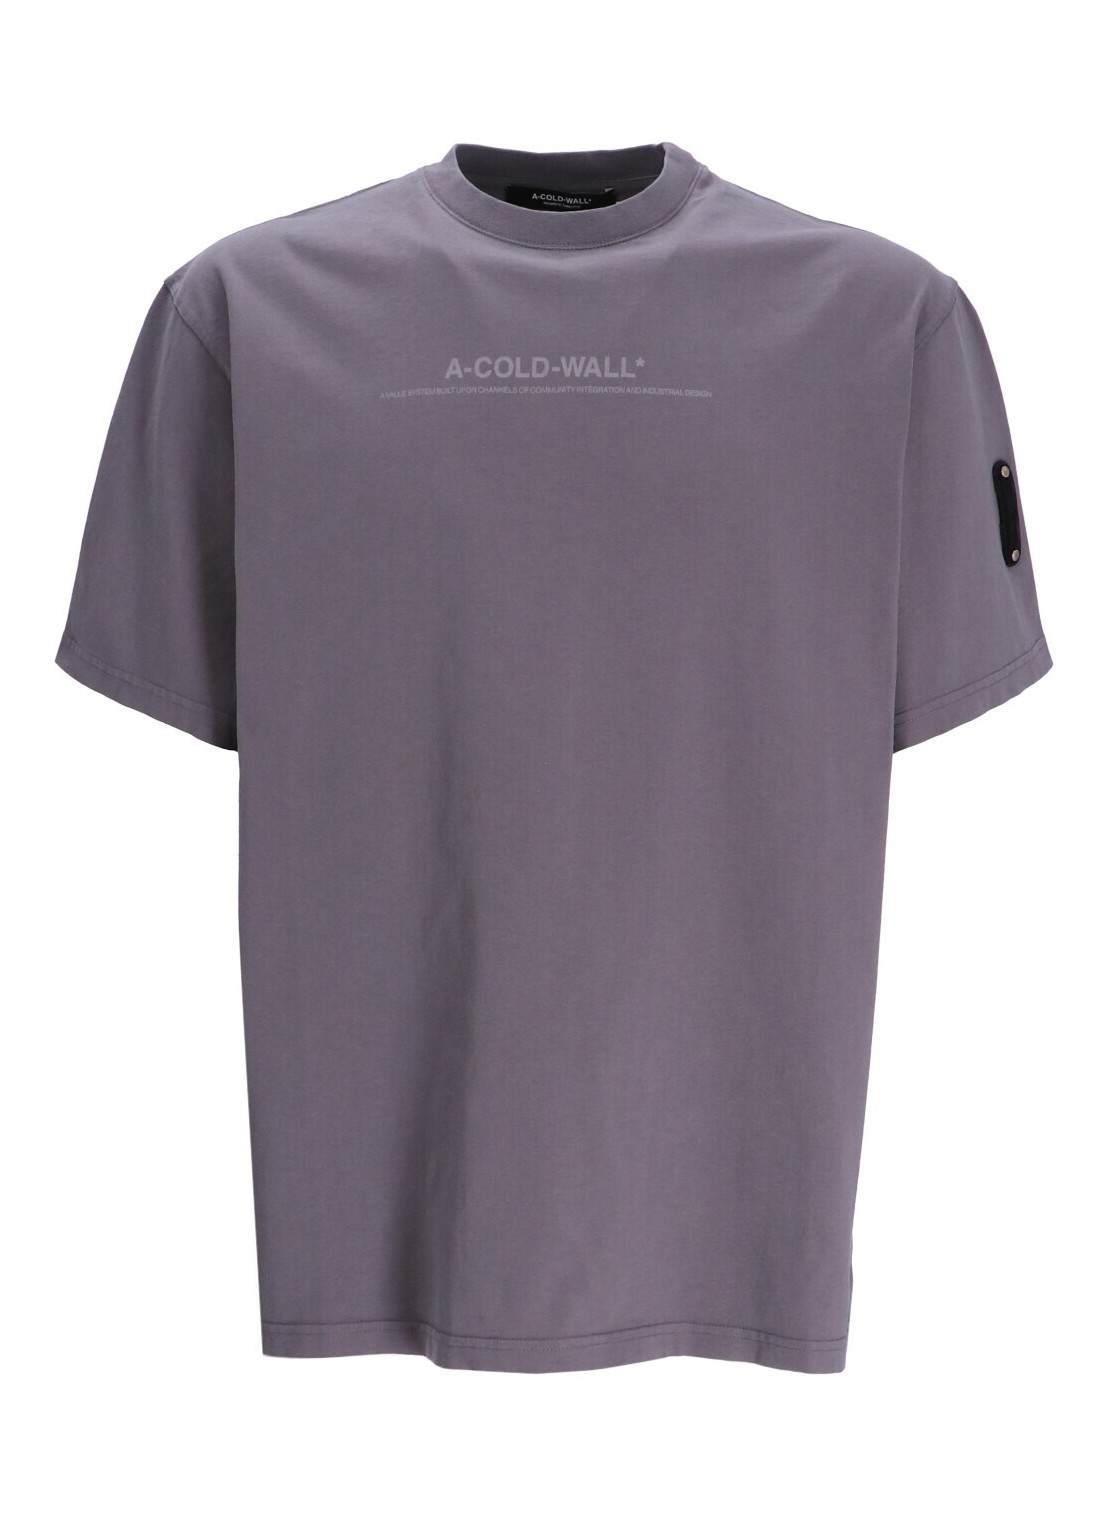 Camiseta a-cold-wall* t-shirt man discourse t-shirt acwmts187 slate slate talla gris
 